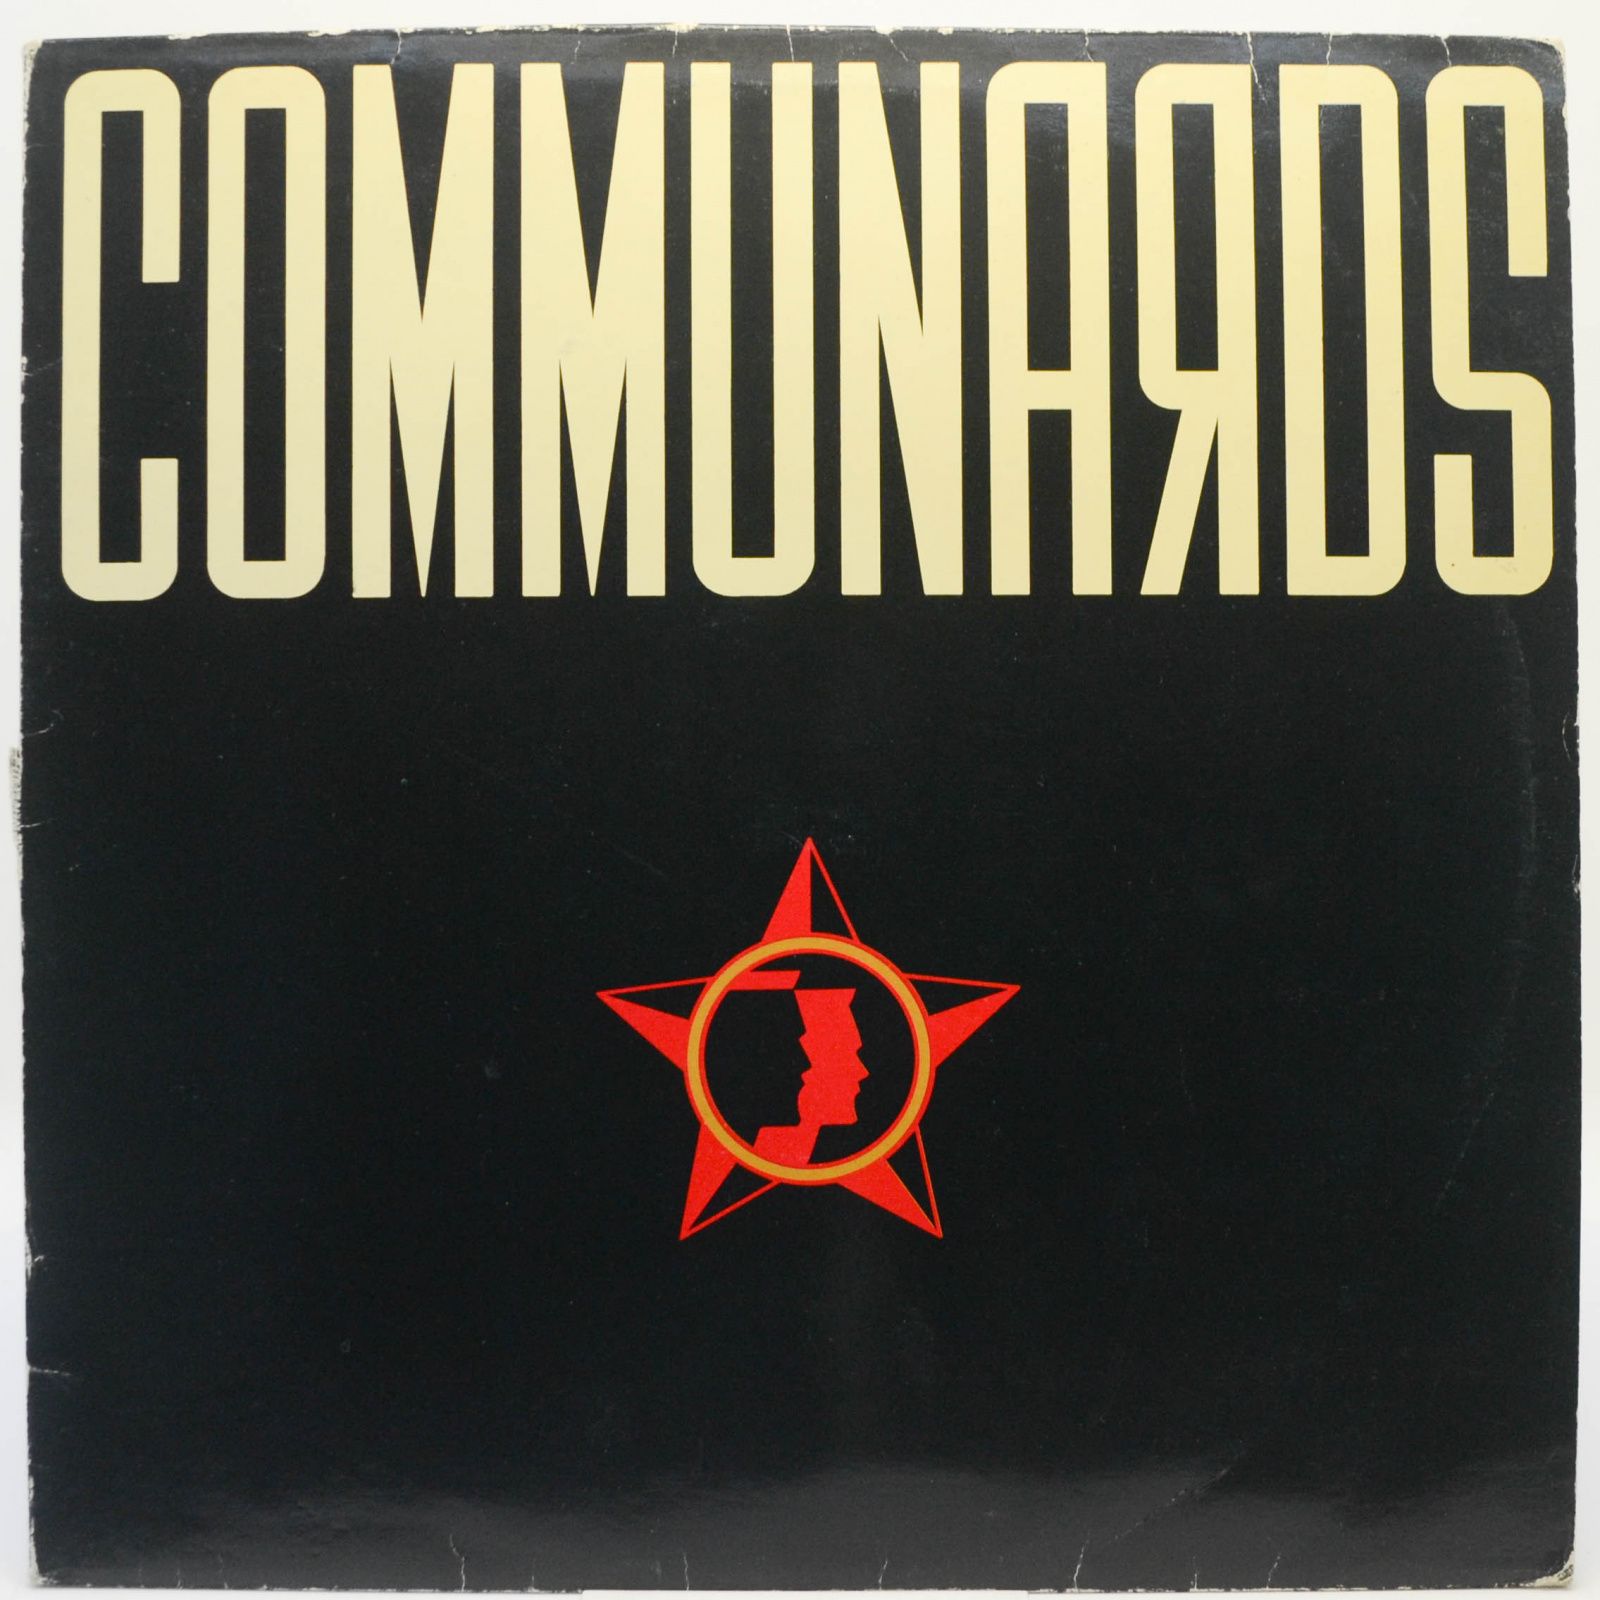 Communards, 1986